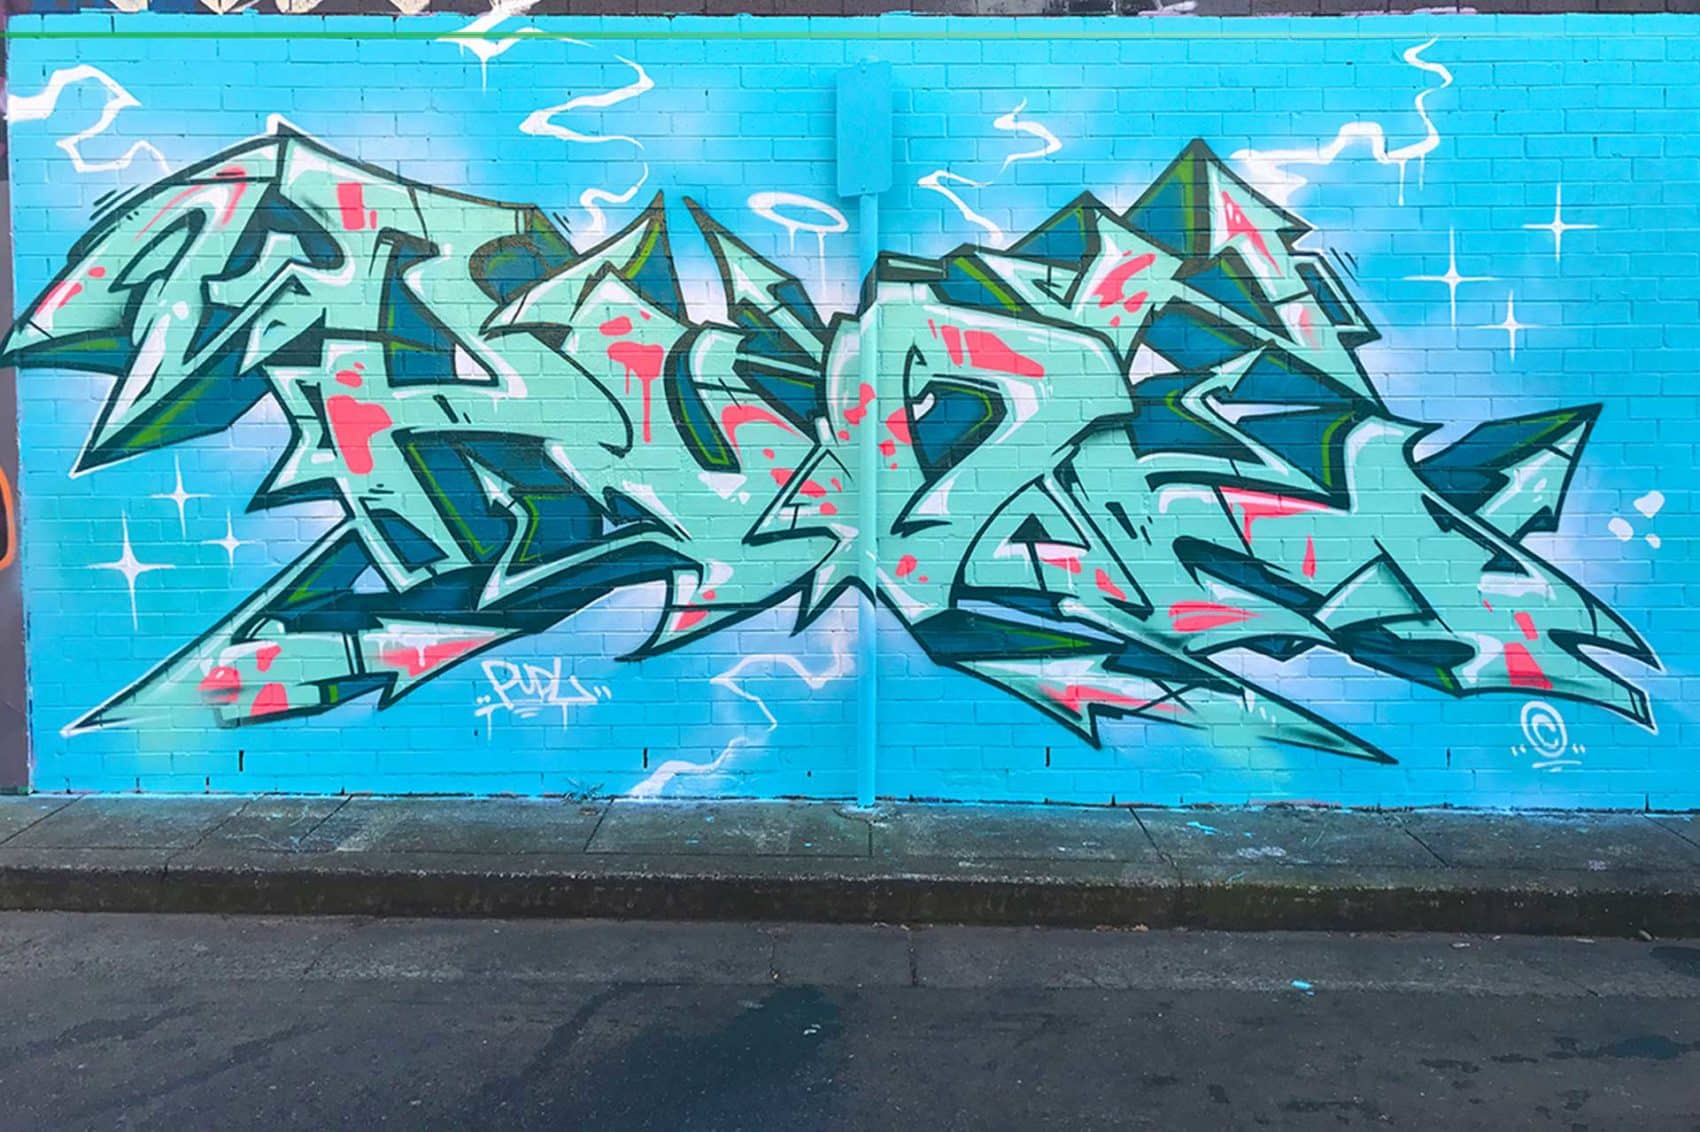 sydney graffiti artist pudl